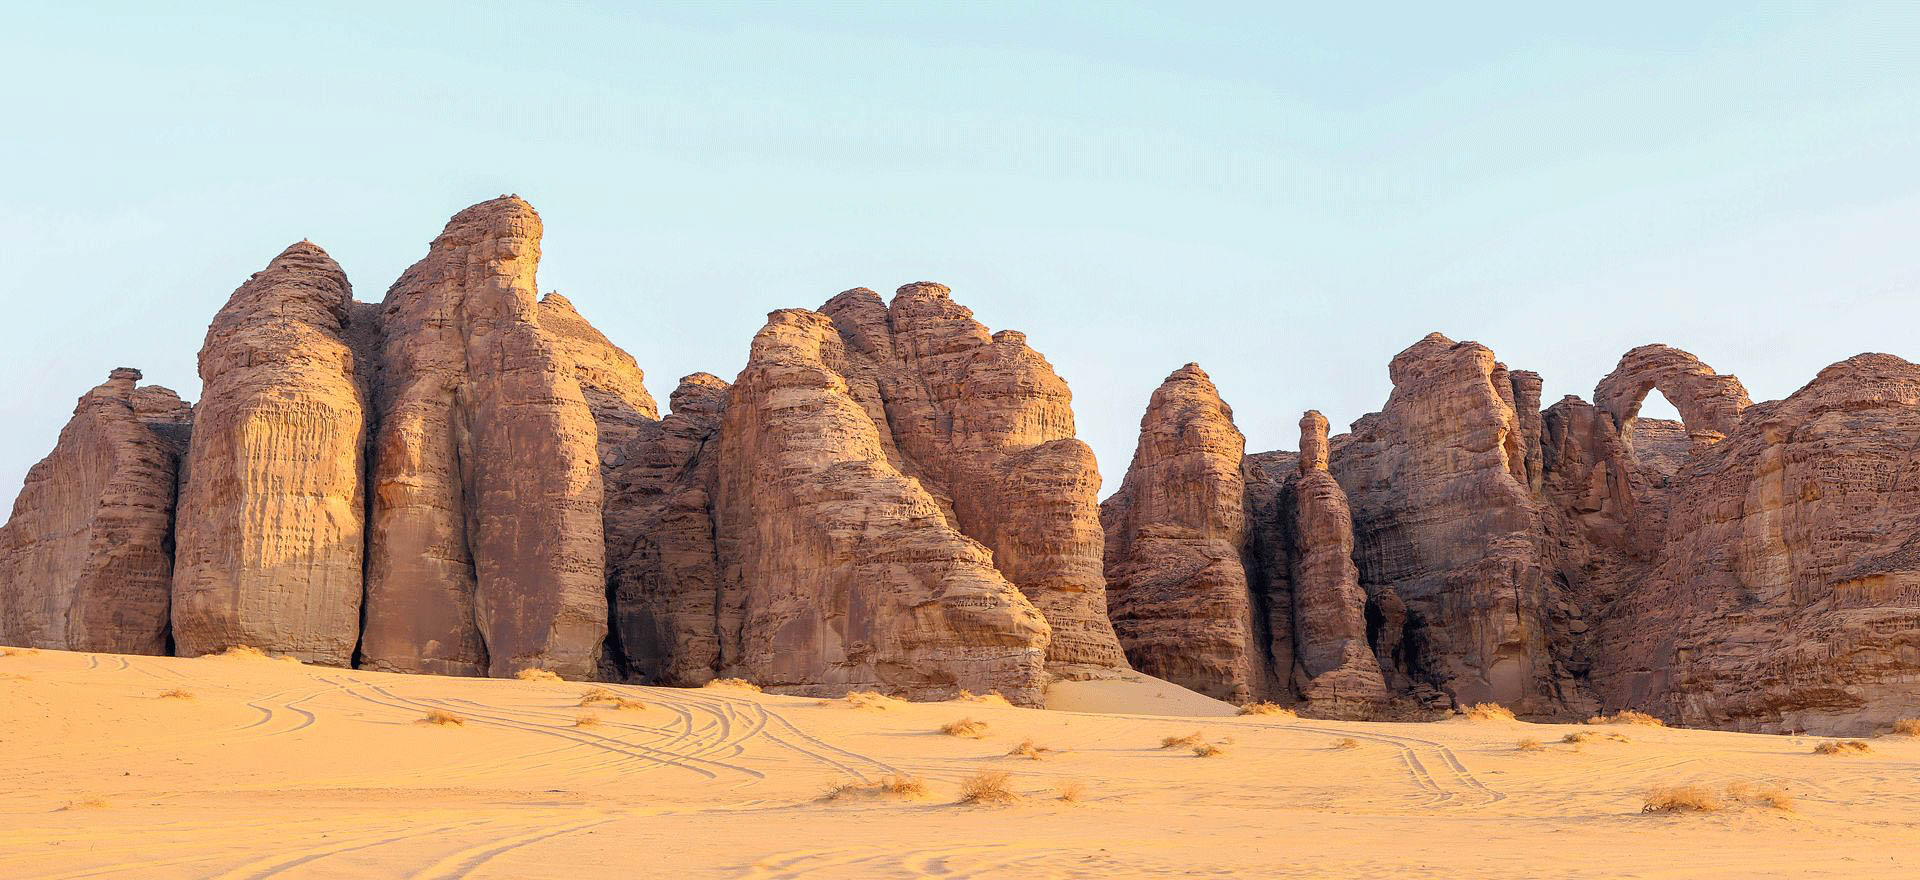 Desert scenery outside Al Ula - Saudi Arabia tours and holidays